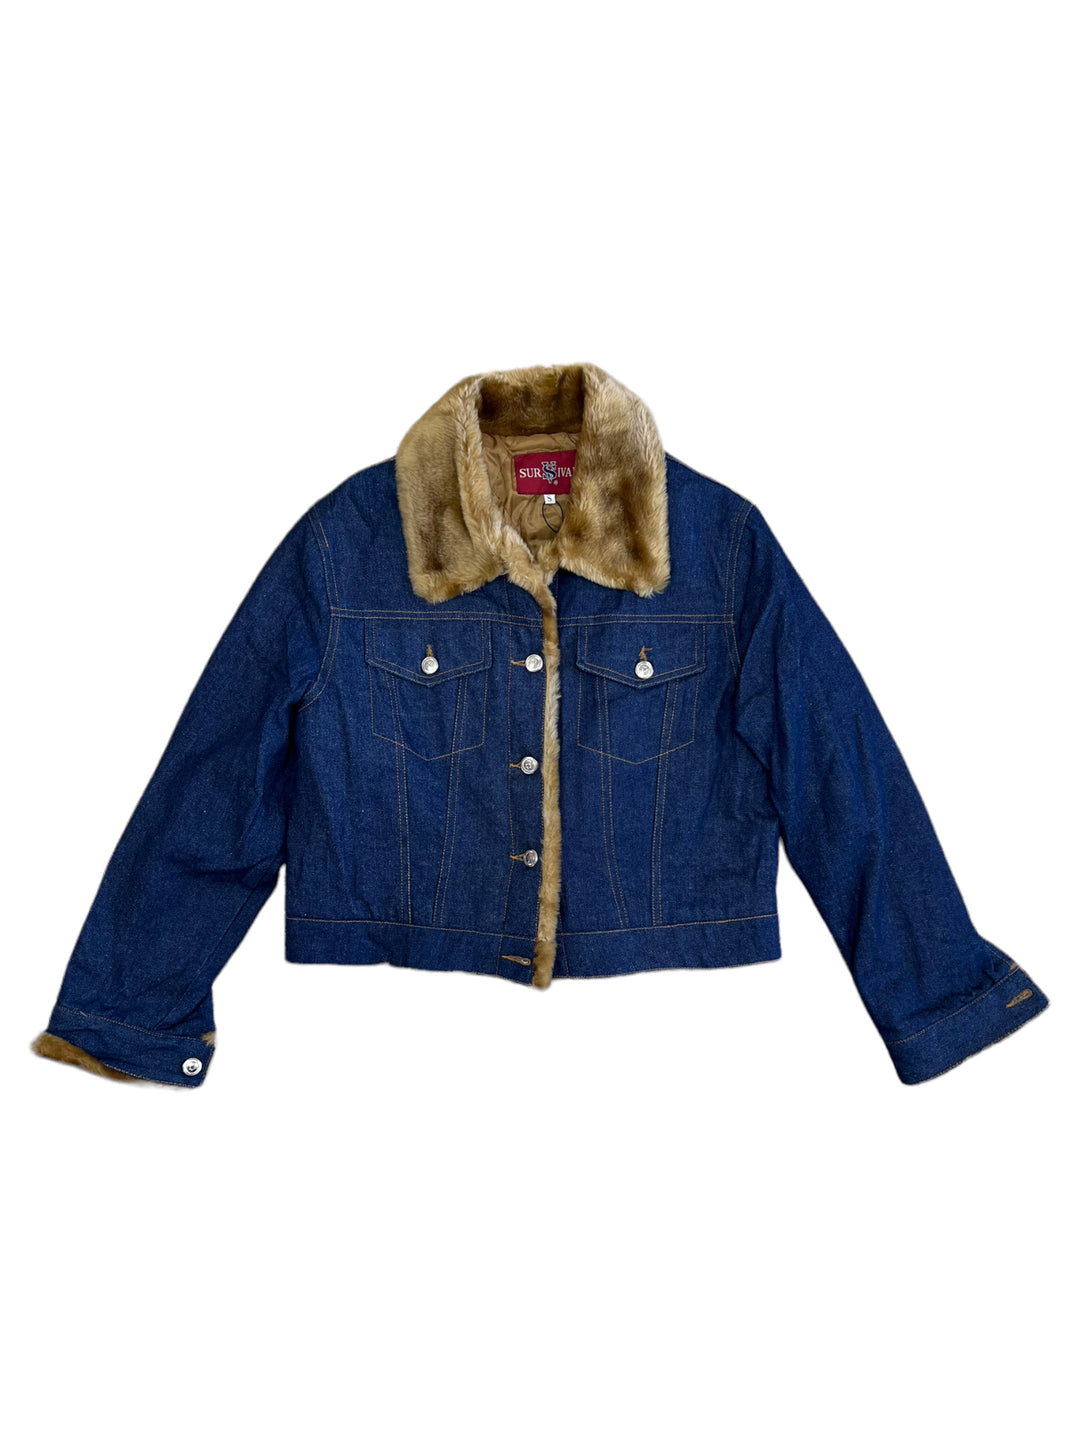 Vintage Denim Jacket w/ Faux Fur Collar Women’s Small